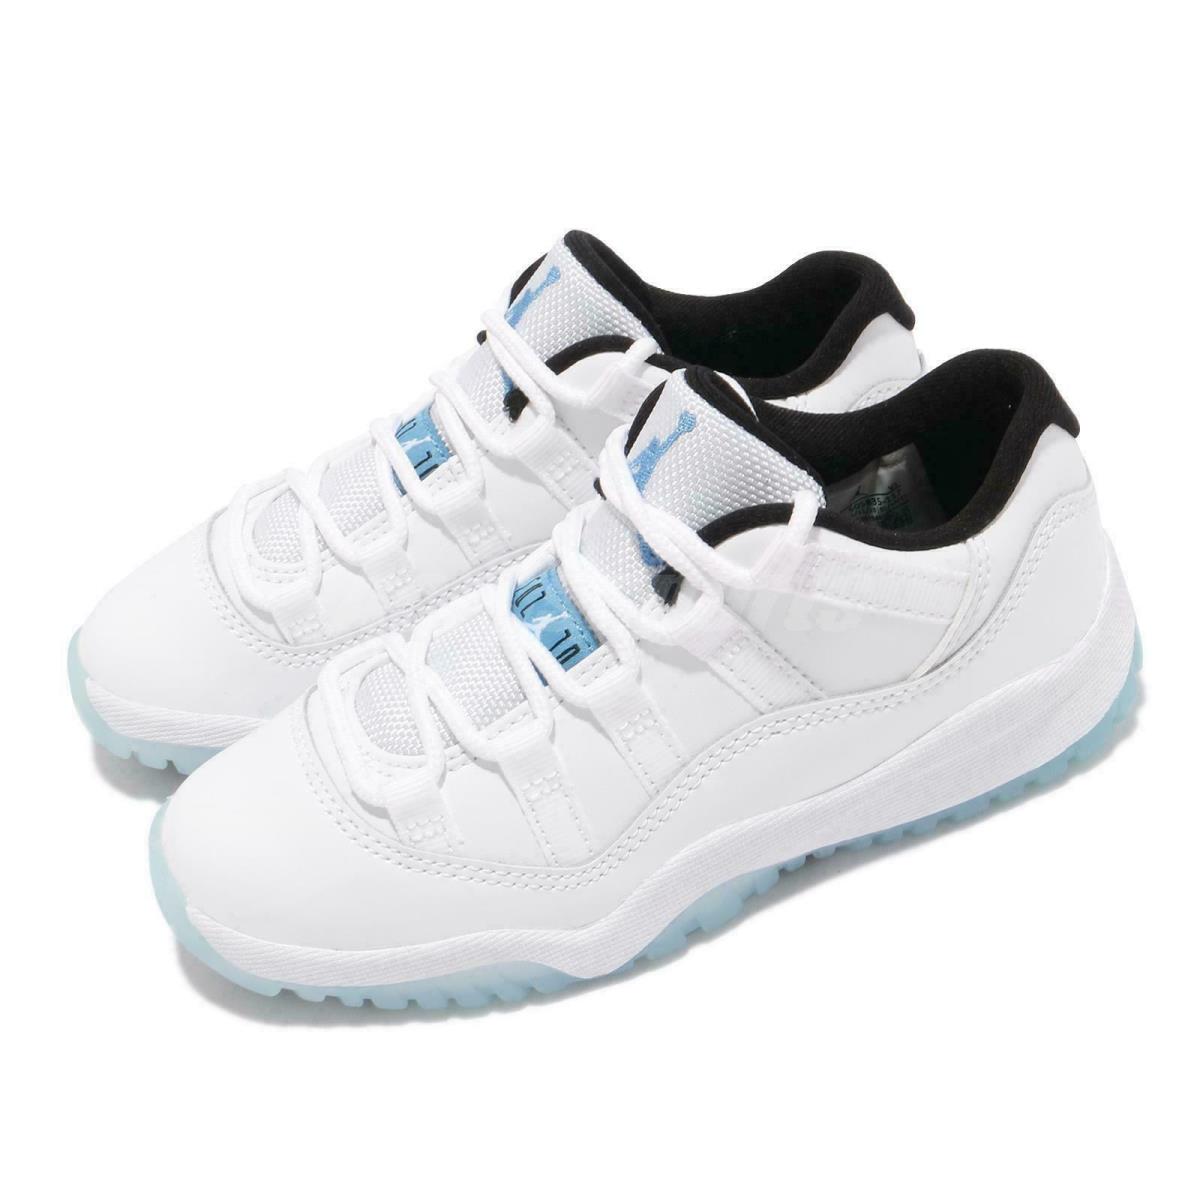 Nike Jordan11 Retro Low PS White Legend Blue Kids Casual Shoe 505835117